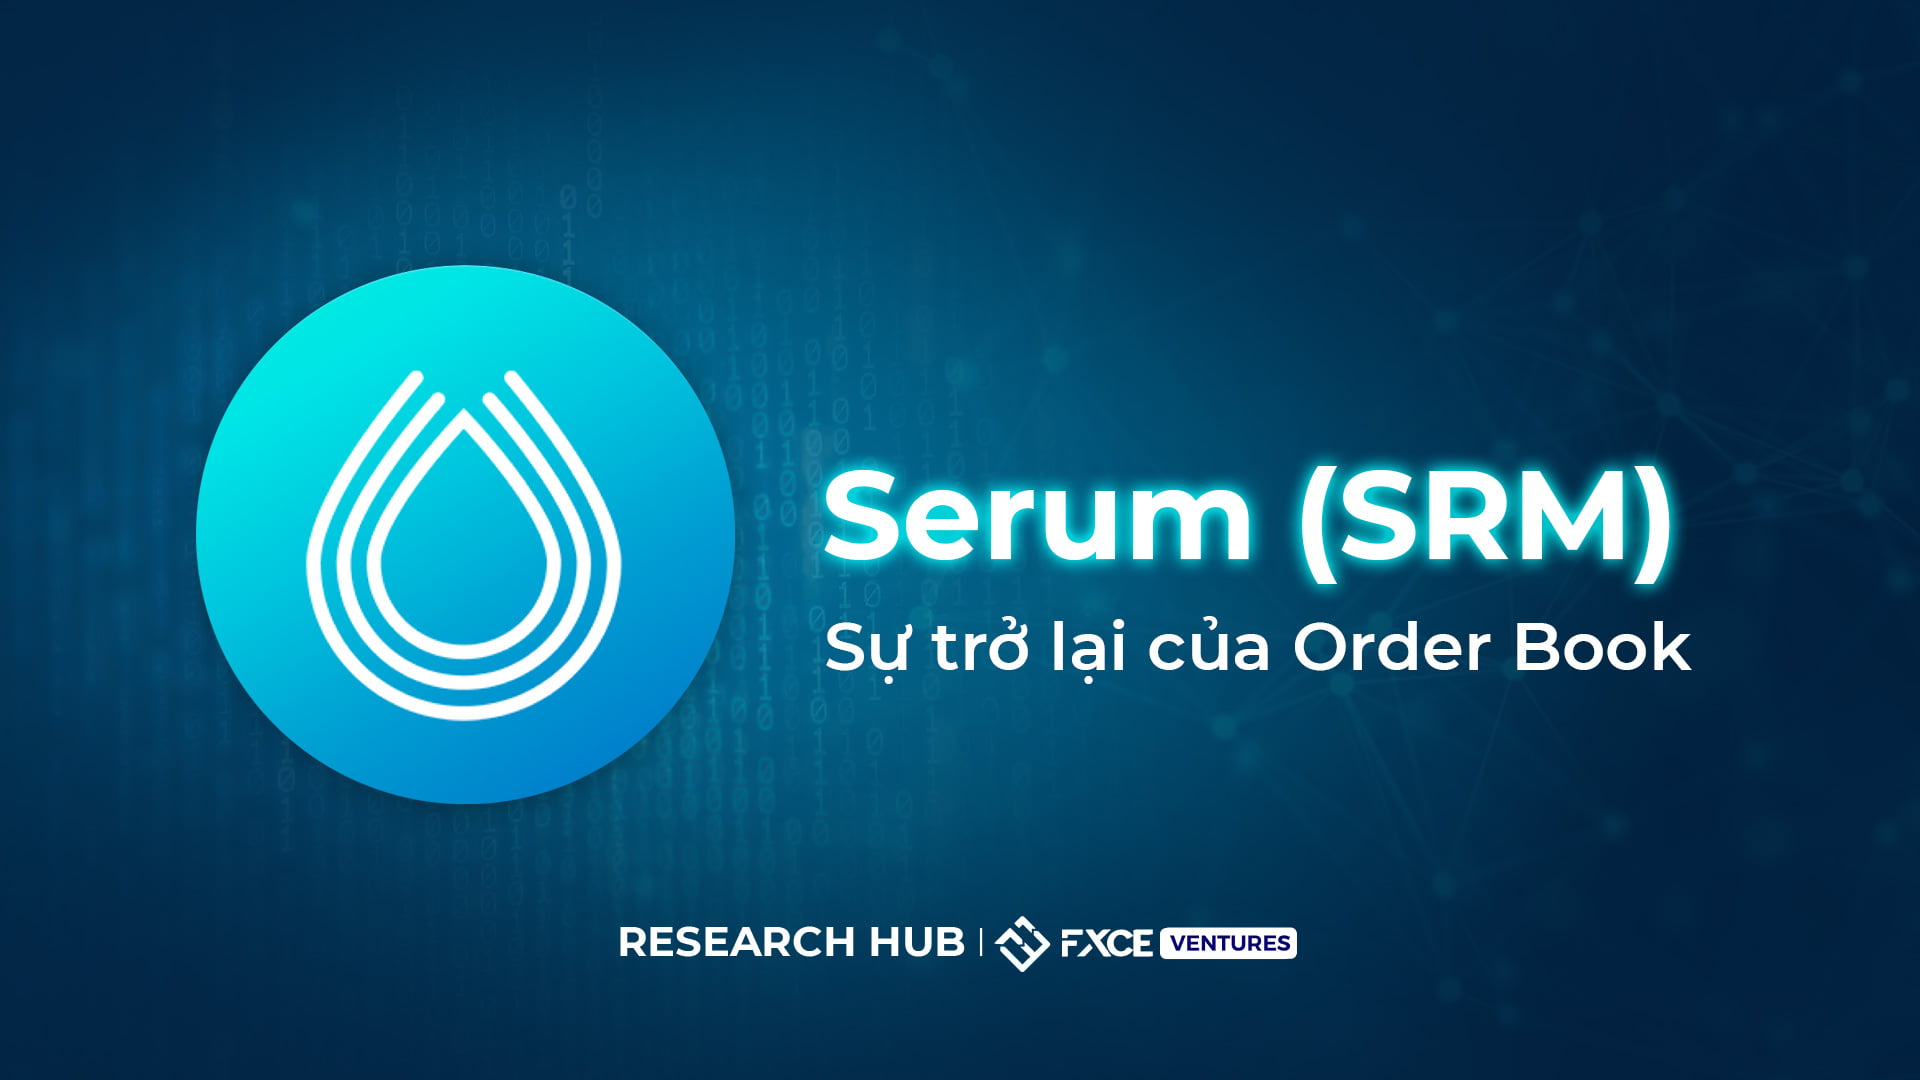 Serum (SRM): Sự trở lại của Order Book